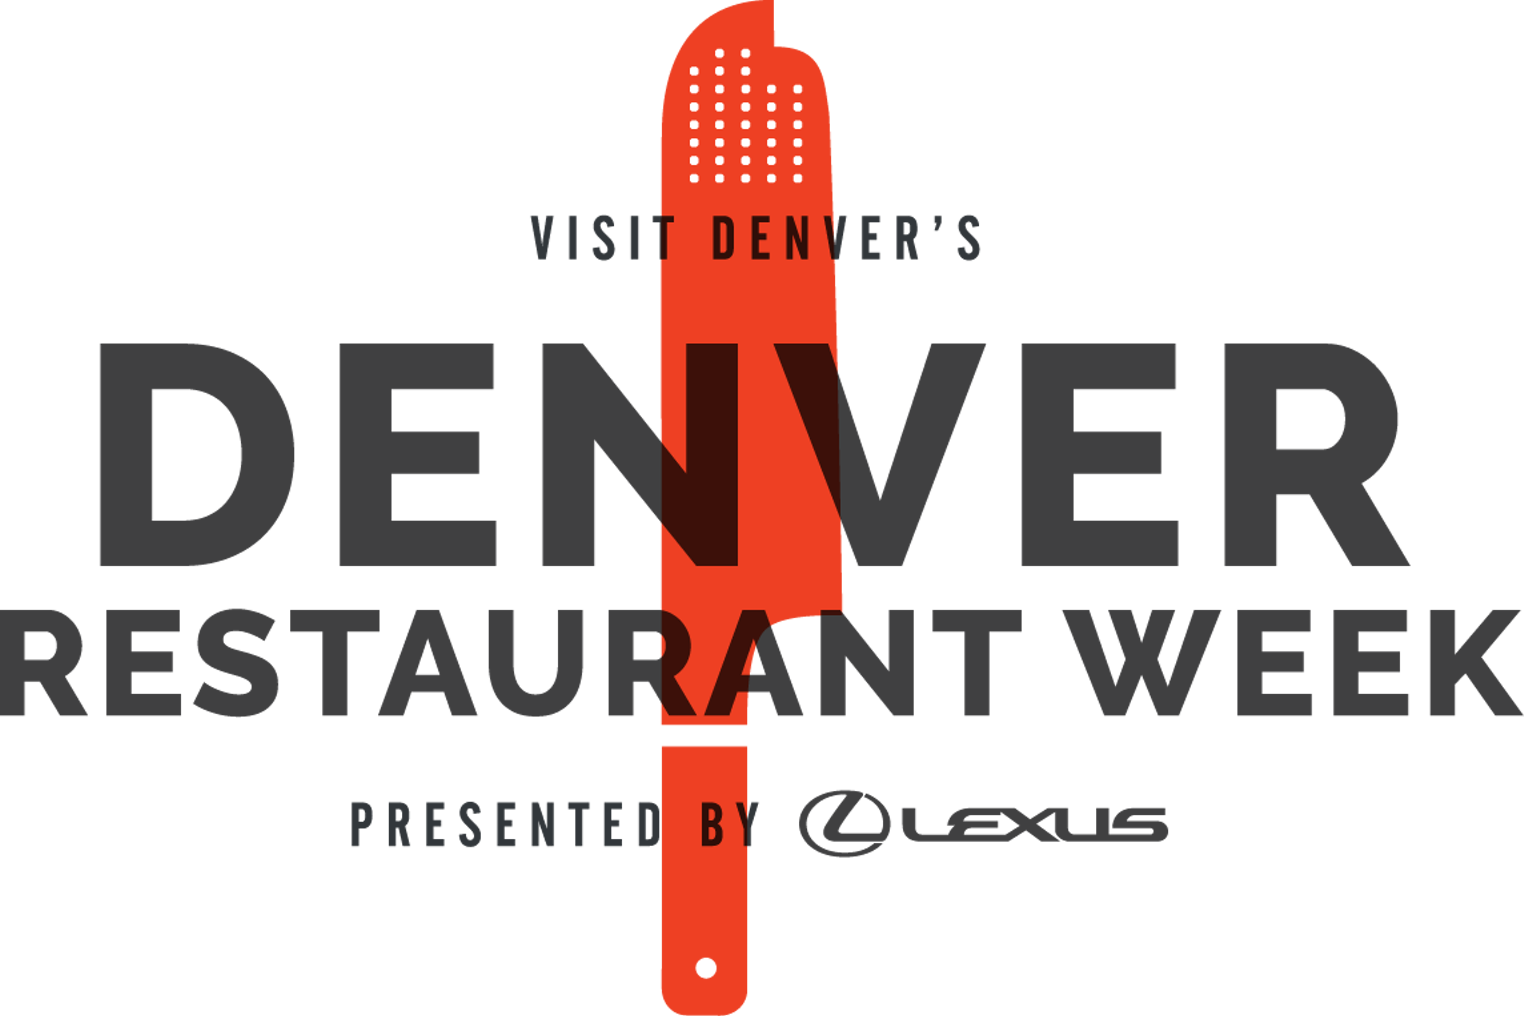 Denver Restaurant Week Rolls Out 2017 Menus at Three Price Points Today